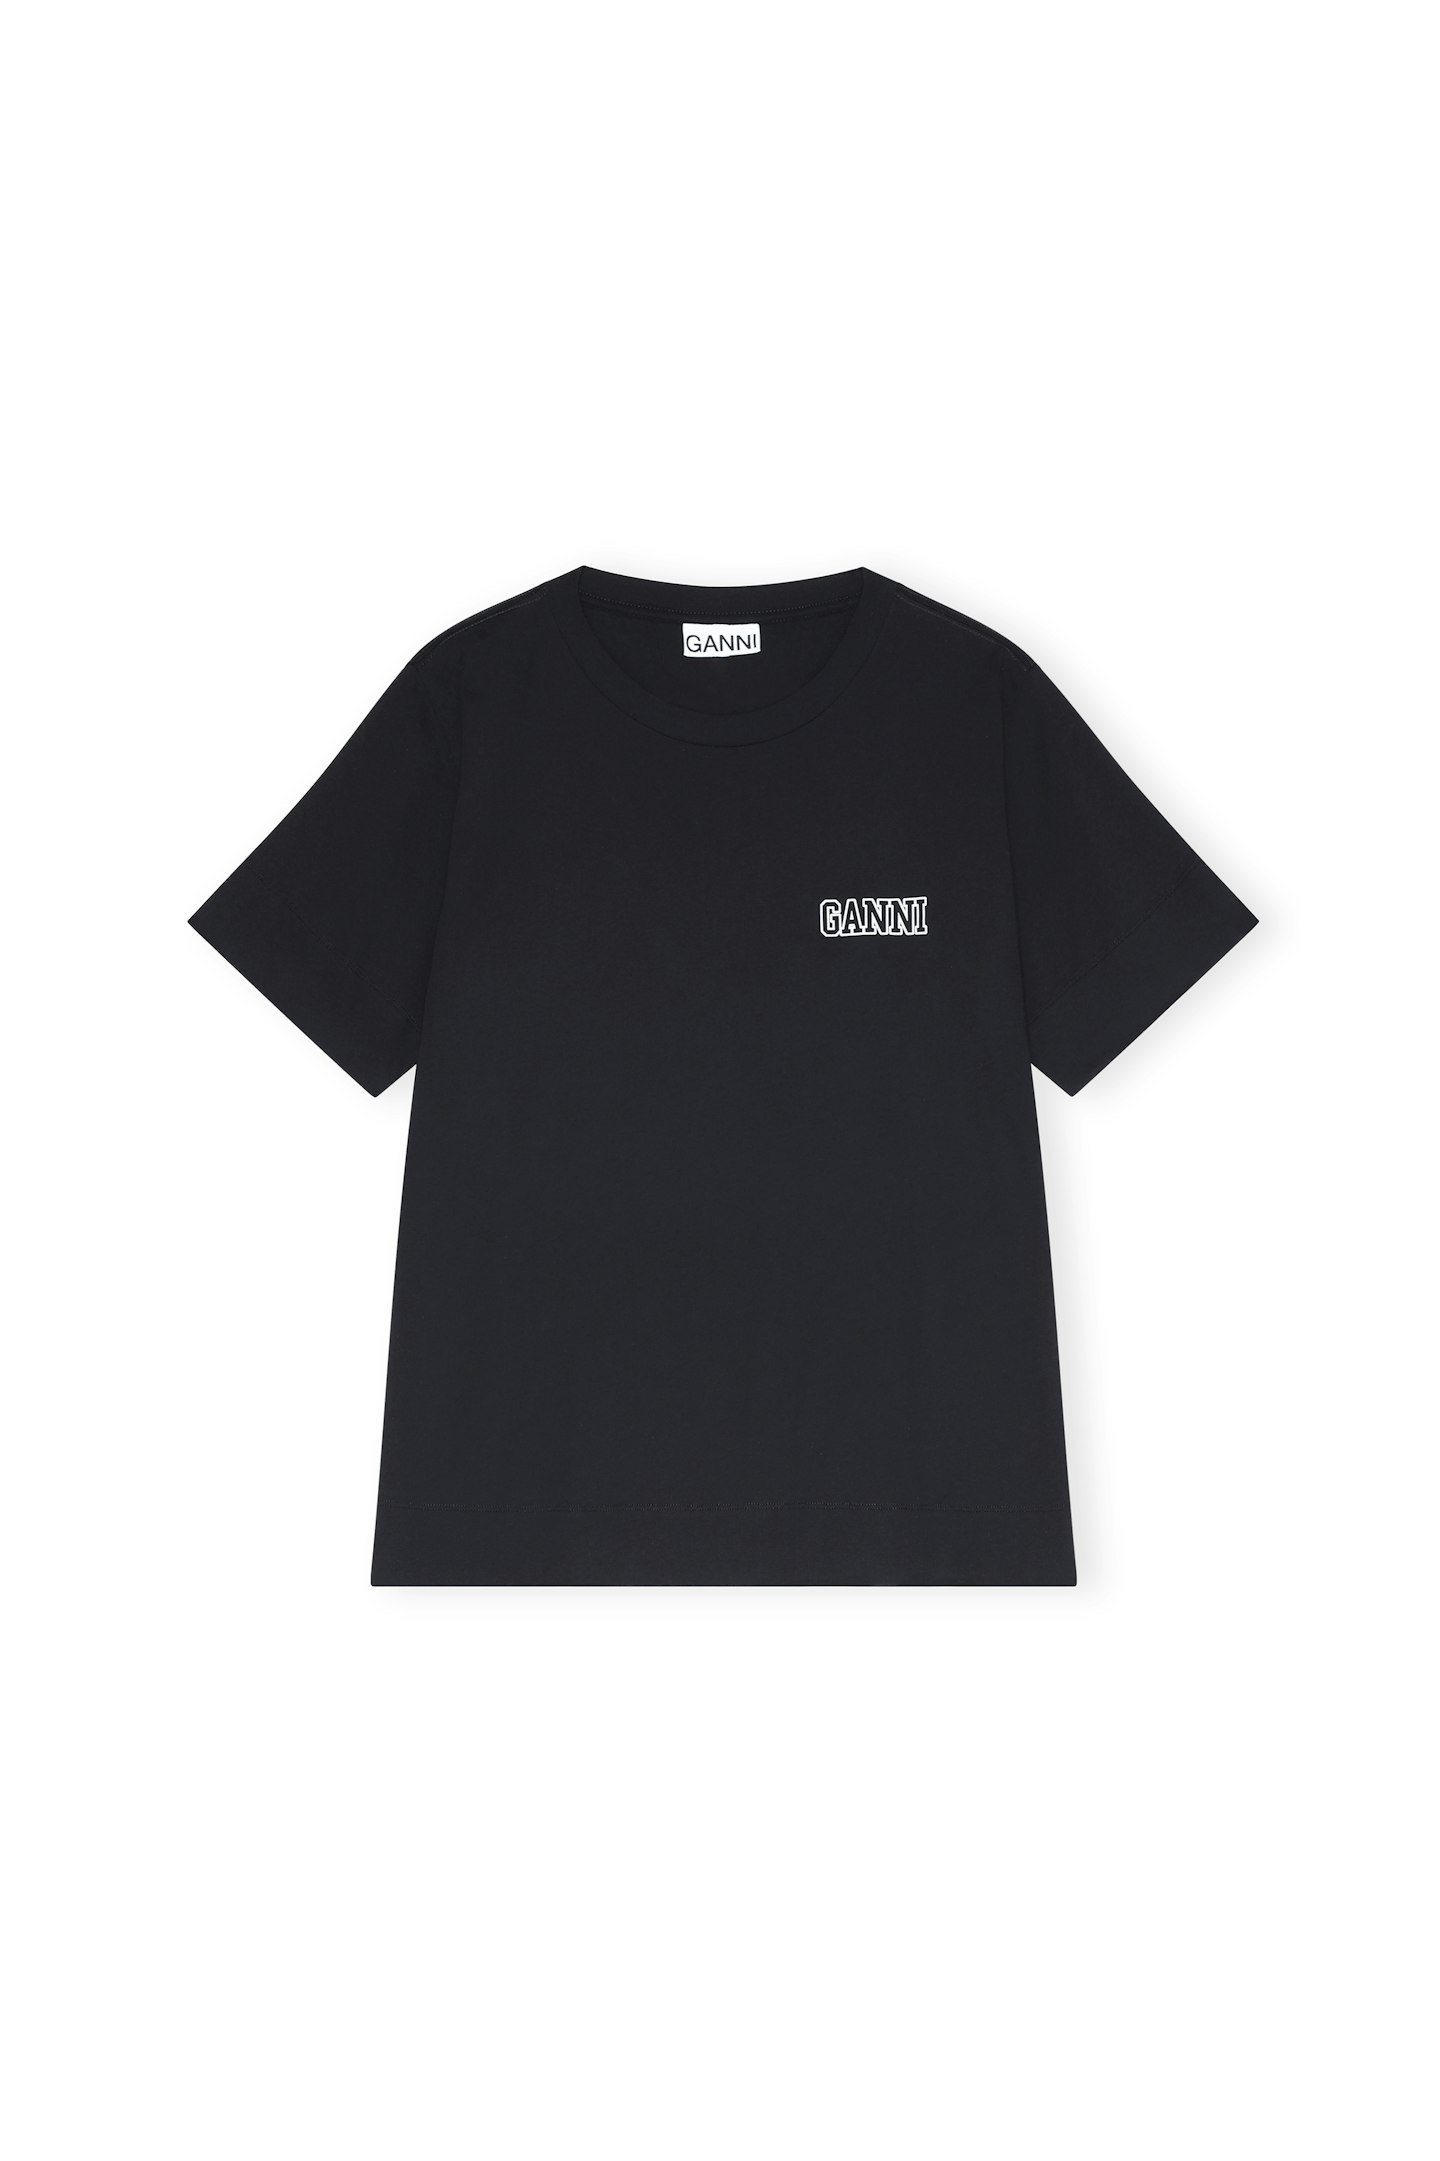 Ganni, Thin Jersey Software T-shirt, £65